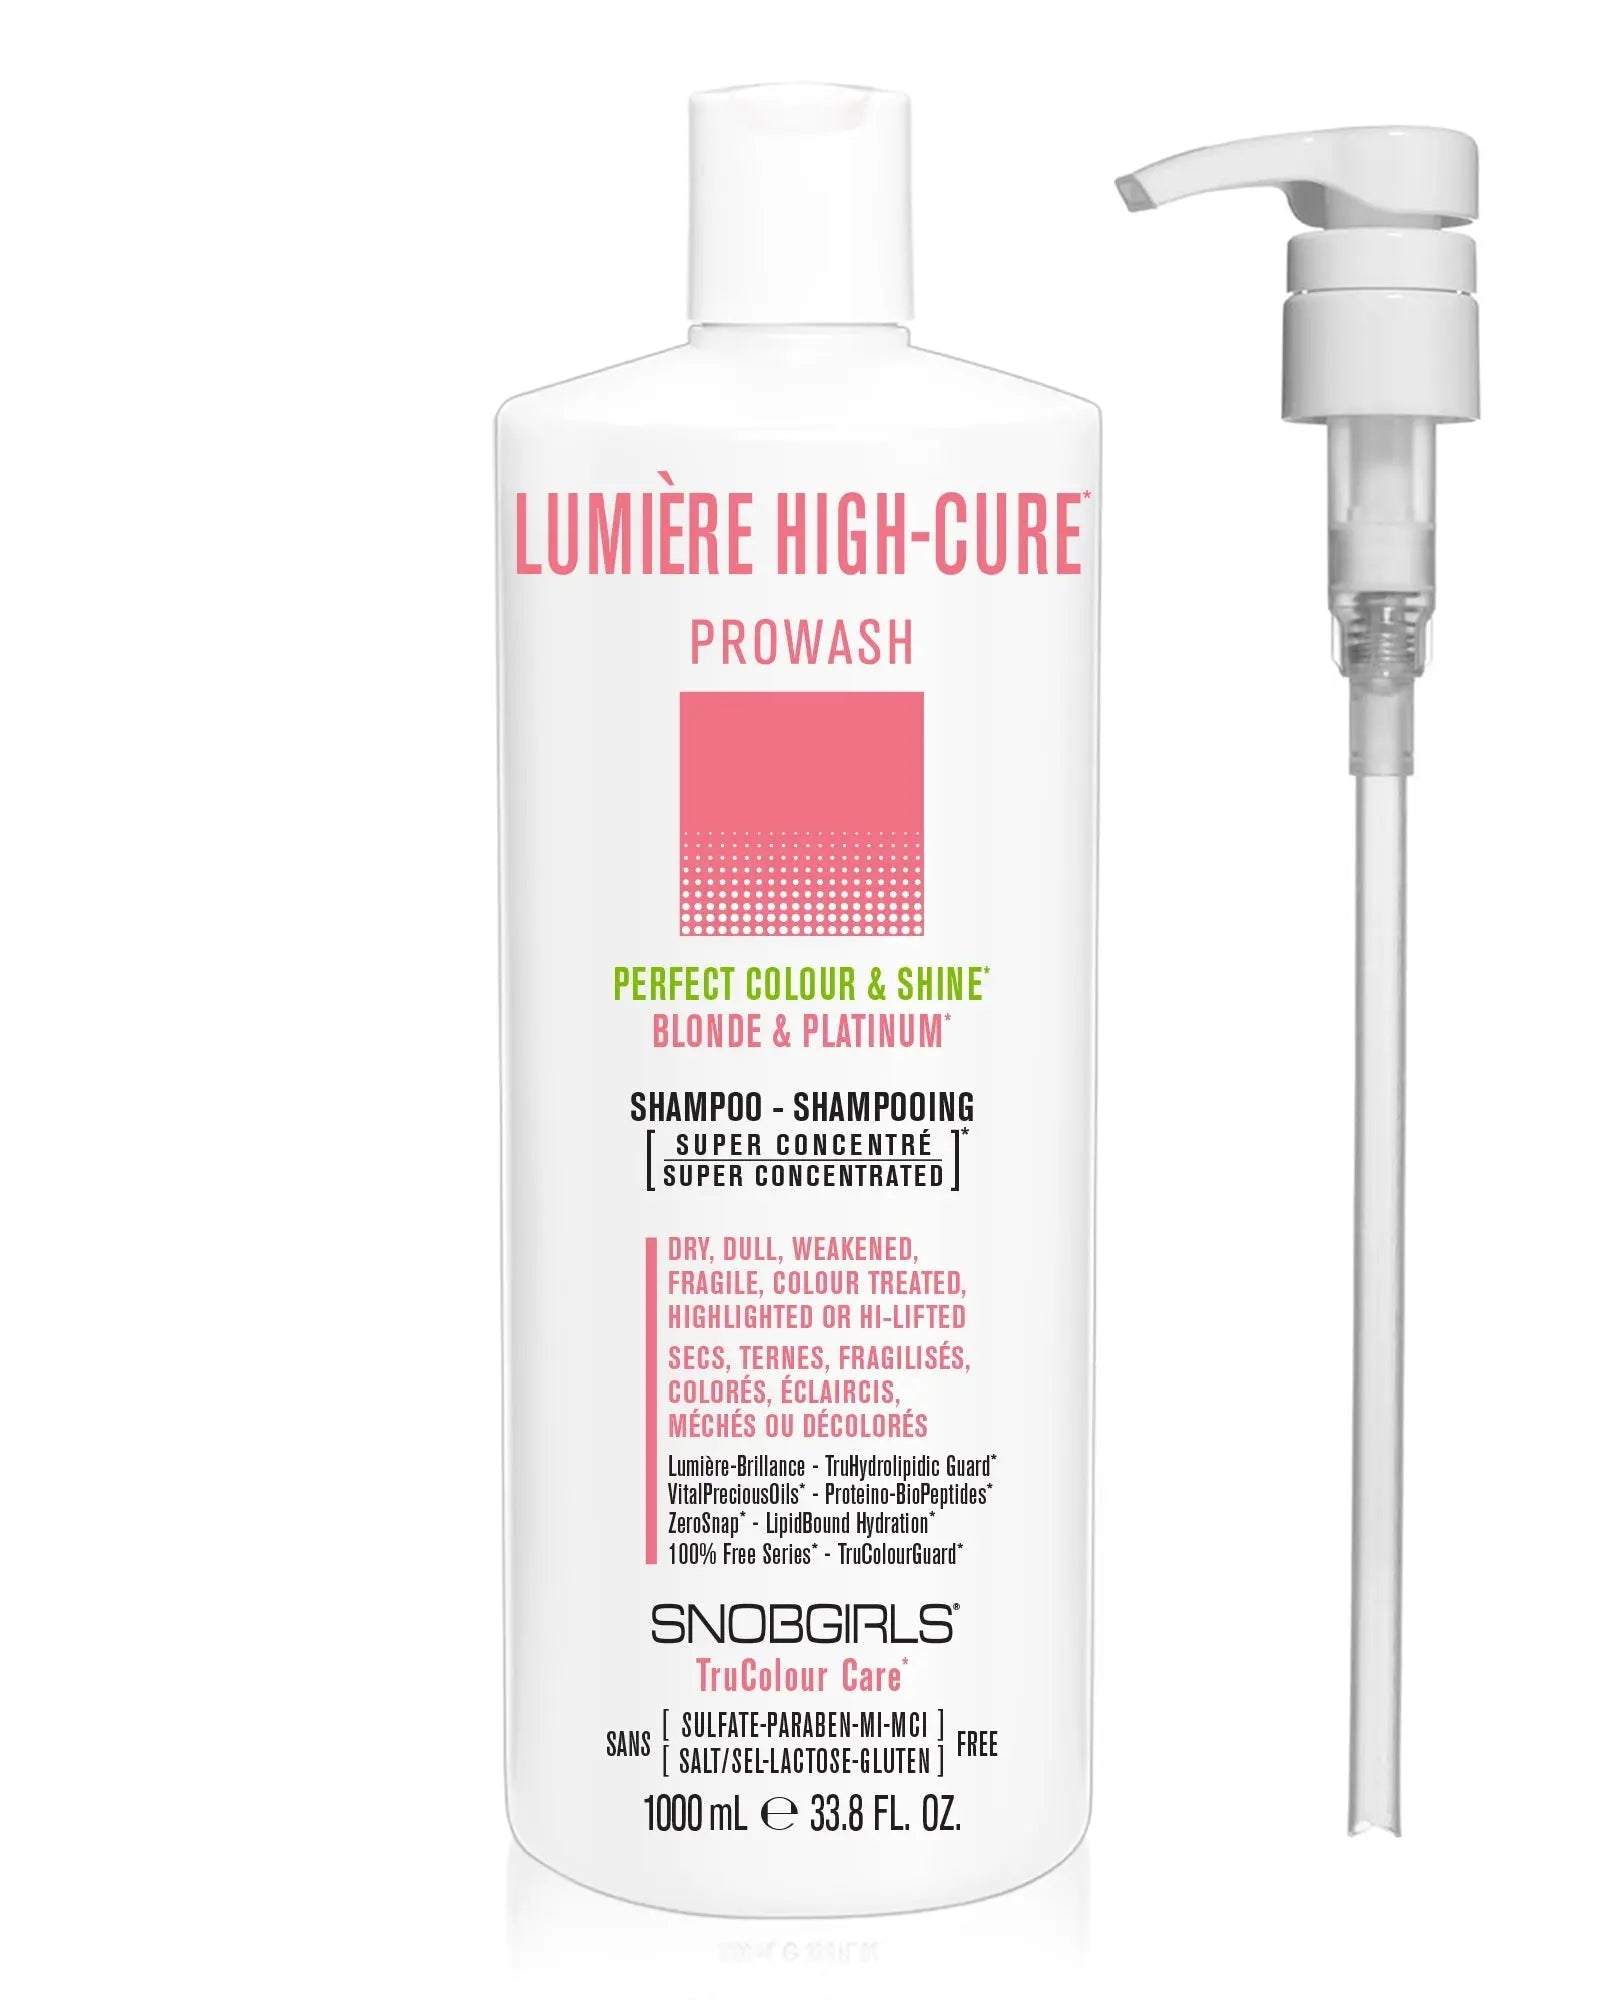 LUMIERE HIGHCURE Prowash Vegan Shampoo 1000 mL + PumpLUMIERE HIGHCURE Prowash Vegan Shampoo 1000 mL + PumpSNOBGIRLS Canada